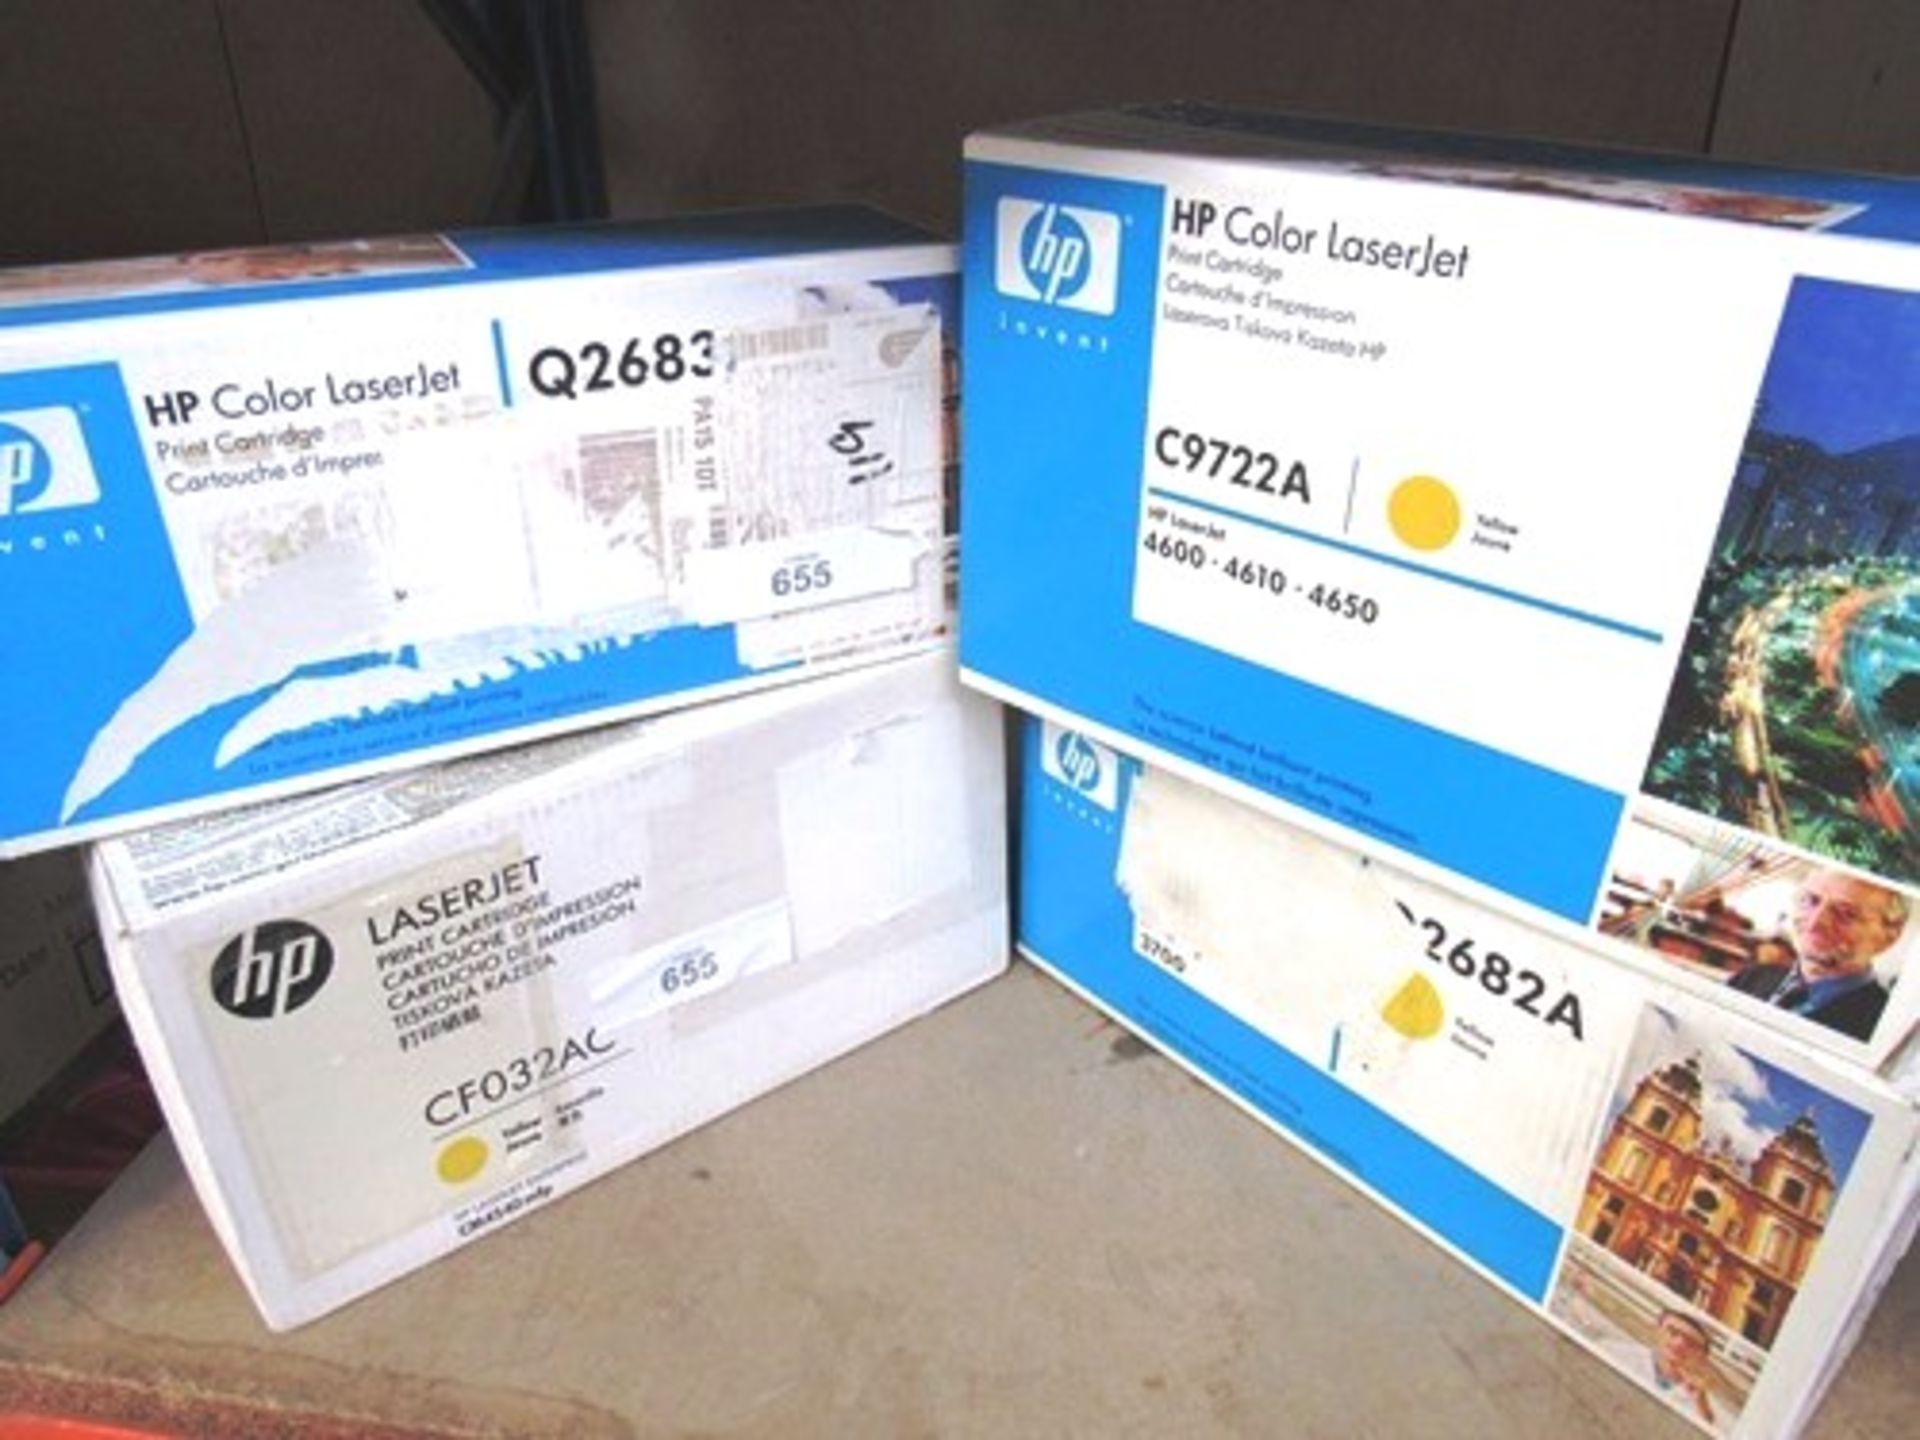 4 x assorted HP toner cartridges comprising 1 x C9722A yellow, 1 x Q2682A yellow, 1 x Q2683 - Image 2 of 2